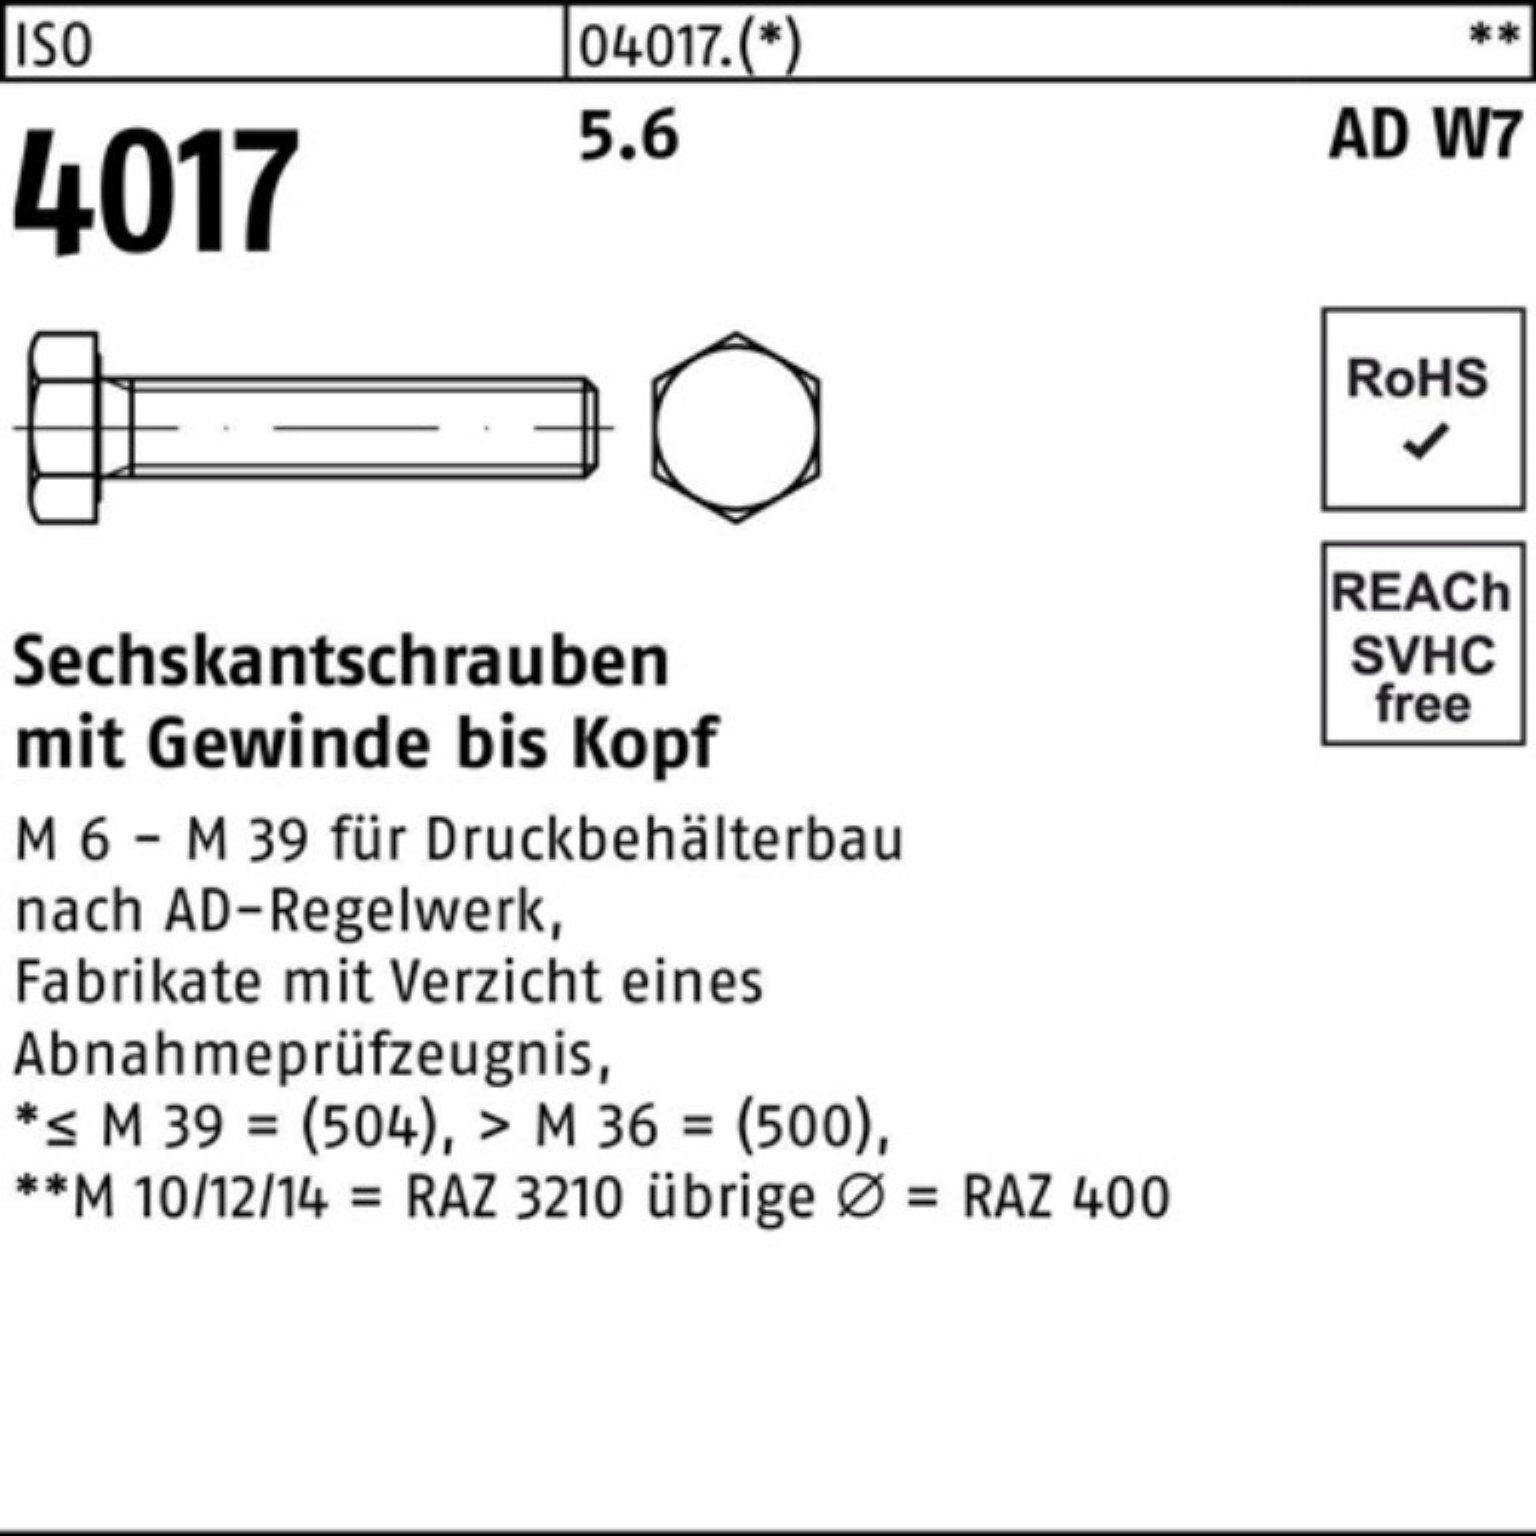 Bufab Sechskantschraube 100er 4017 Pack W7 I 80 Stück M12x VG Sechskantschraube 5.6 50 ISO AD